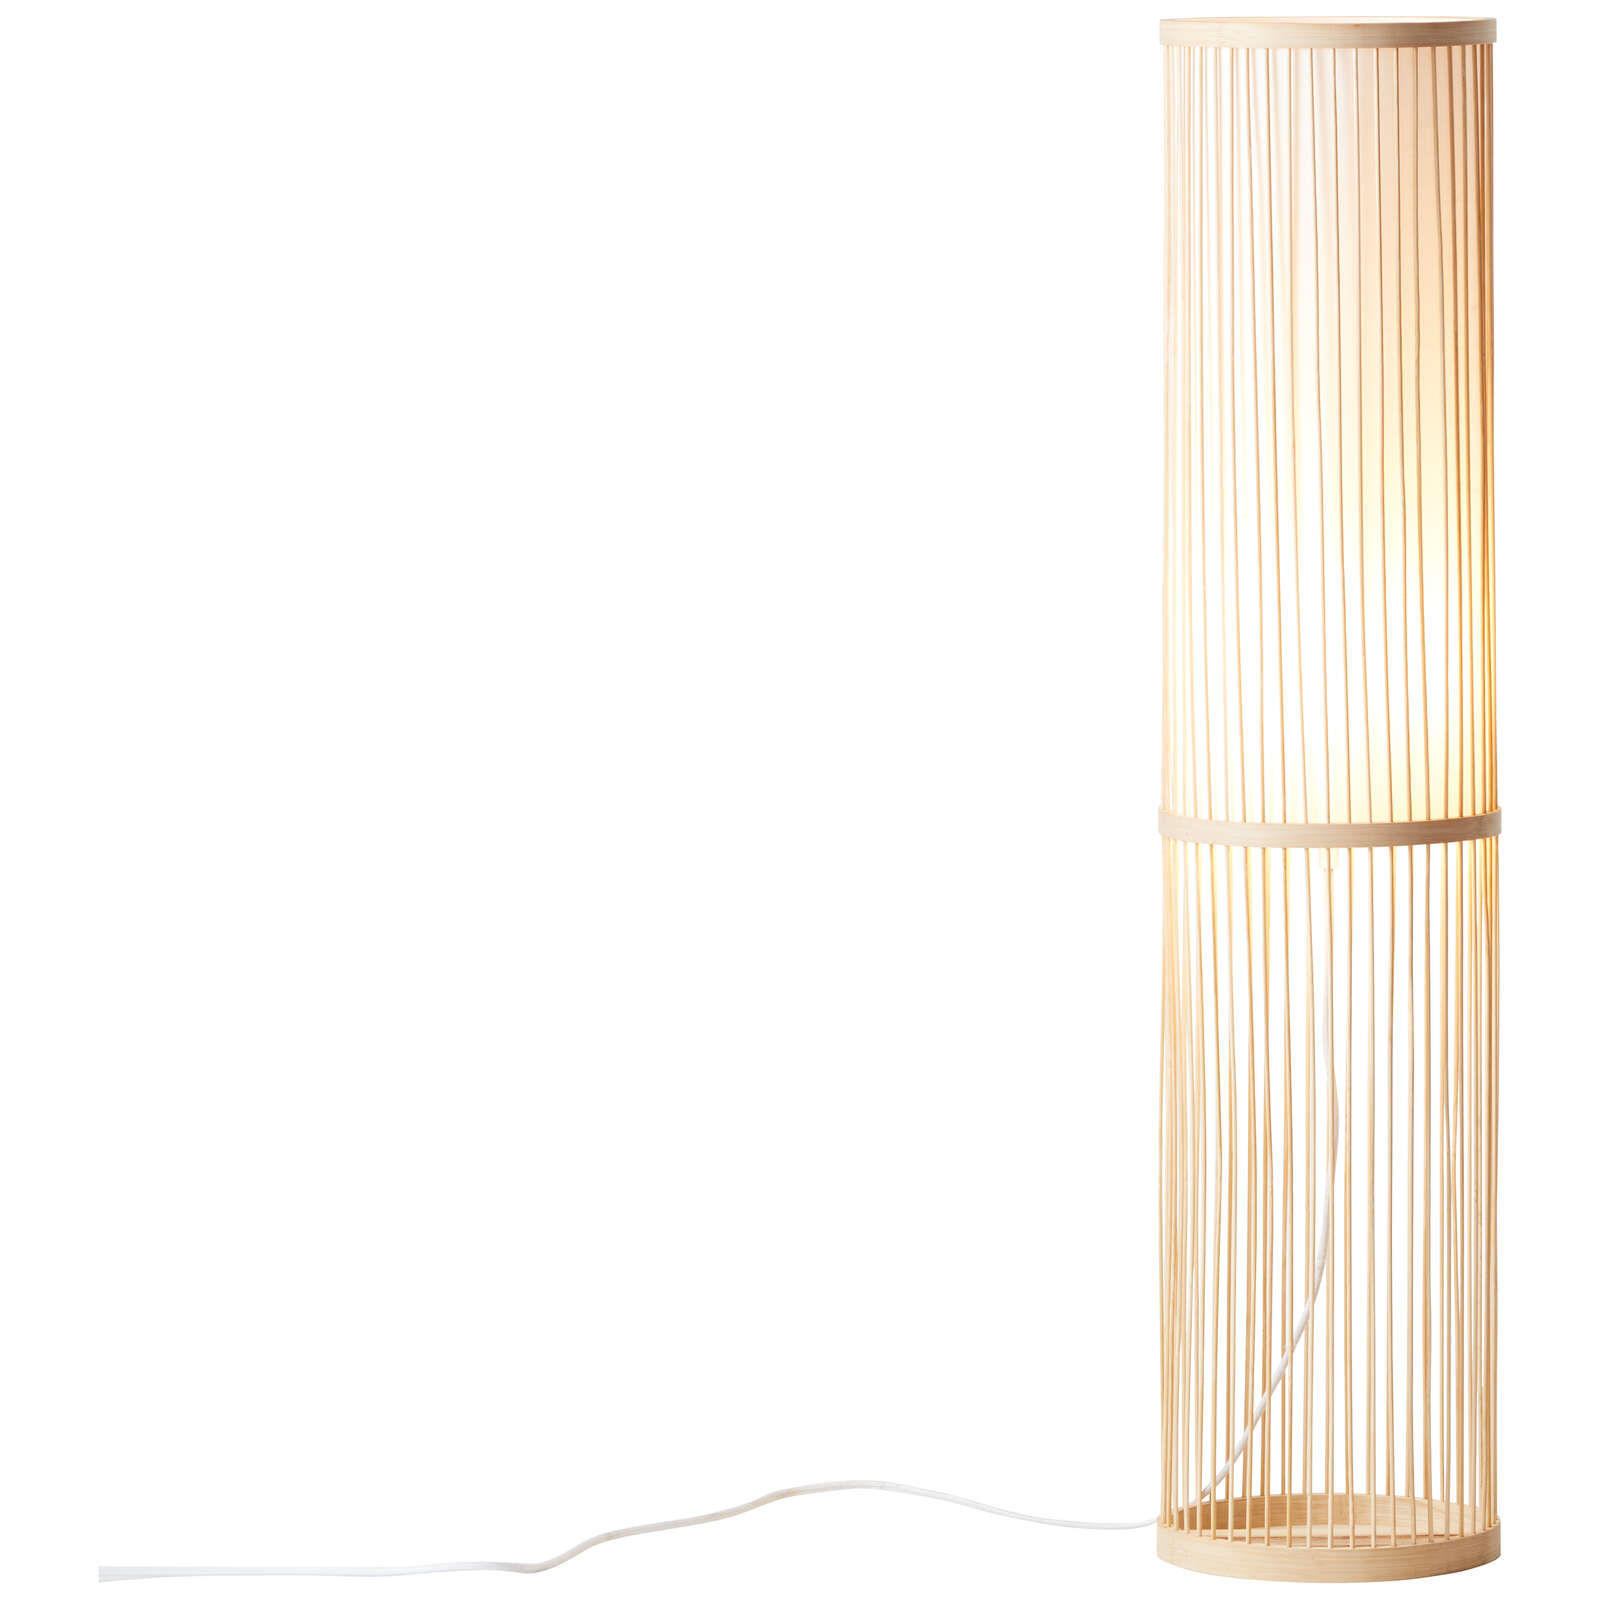             Lampada da terra in bambù - Luise 1 - Marrone
        